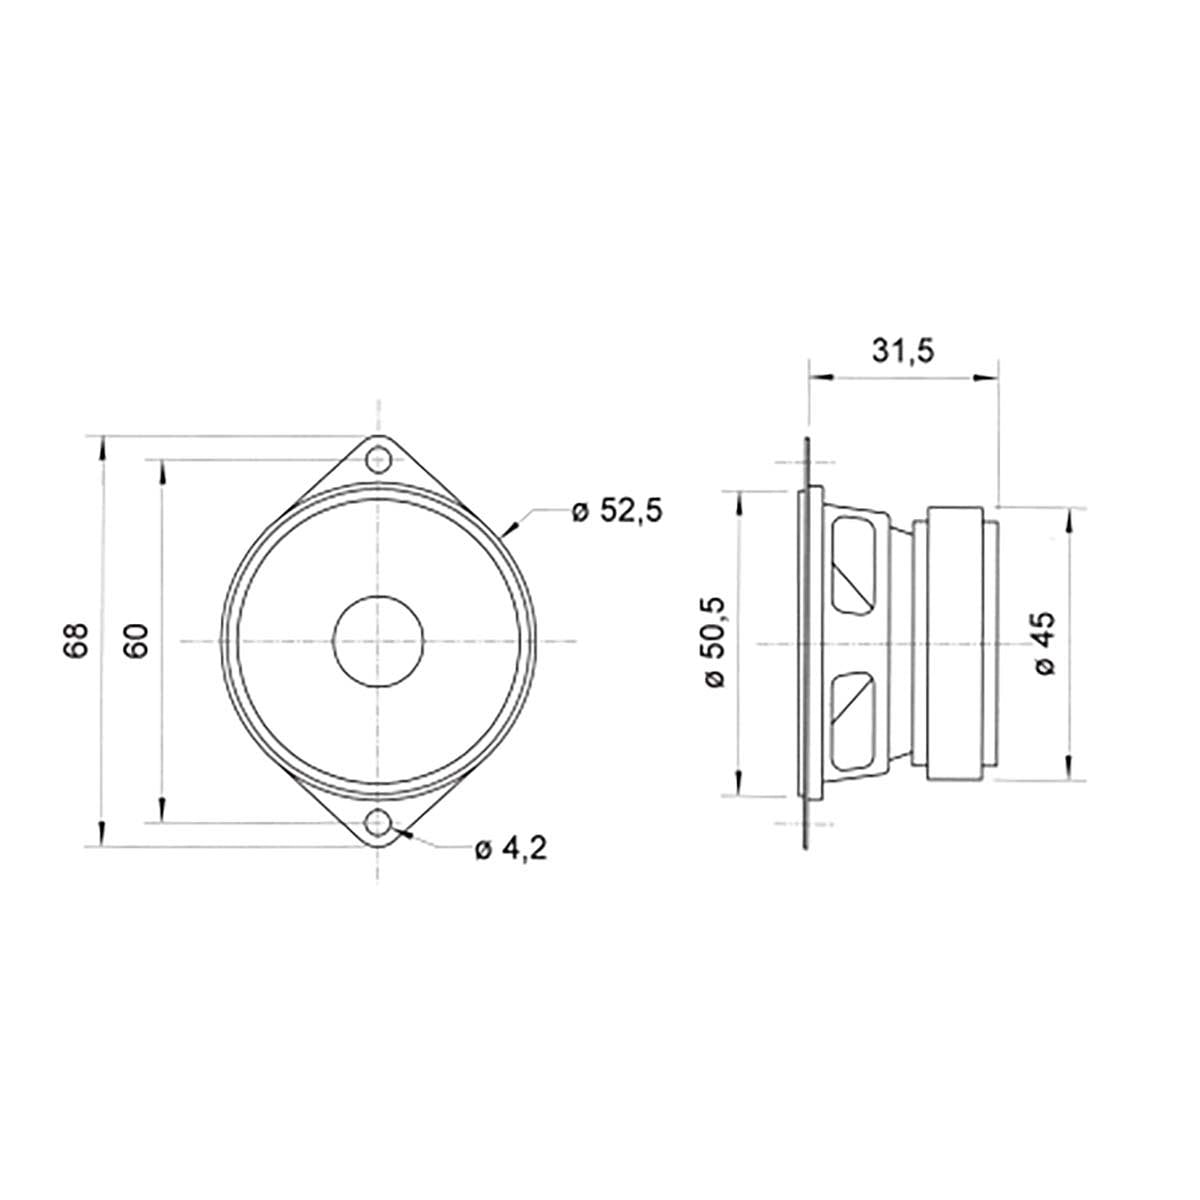 Visaton FRS 5 - 8 Ohm - 5 cm (2") fullrange luidspreker